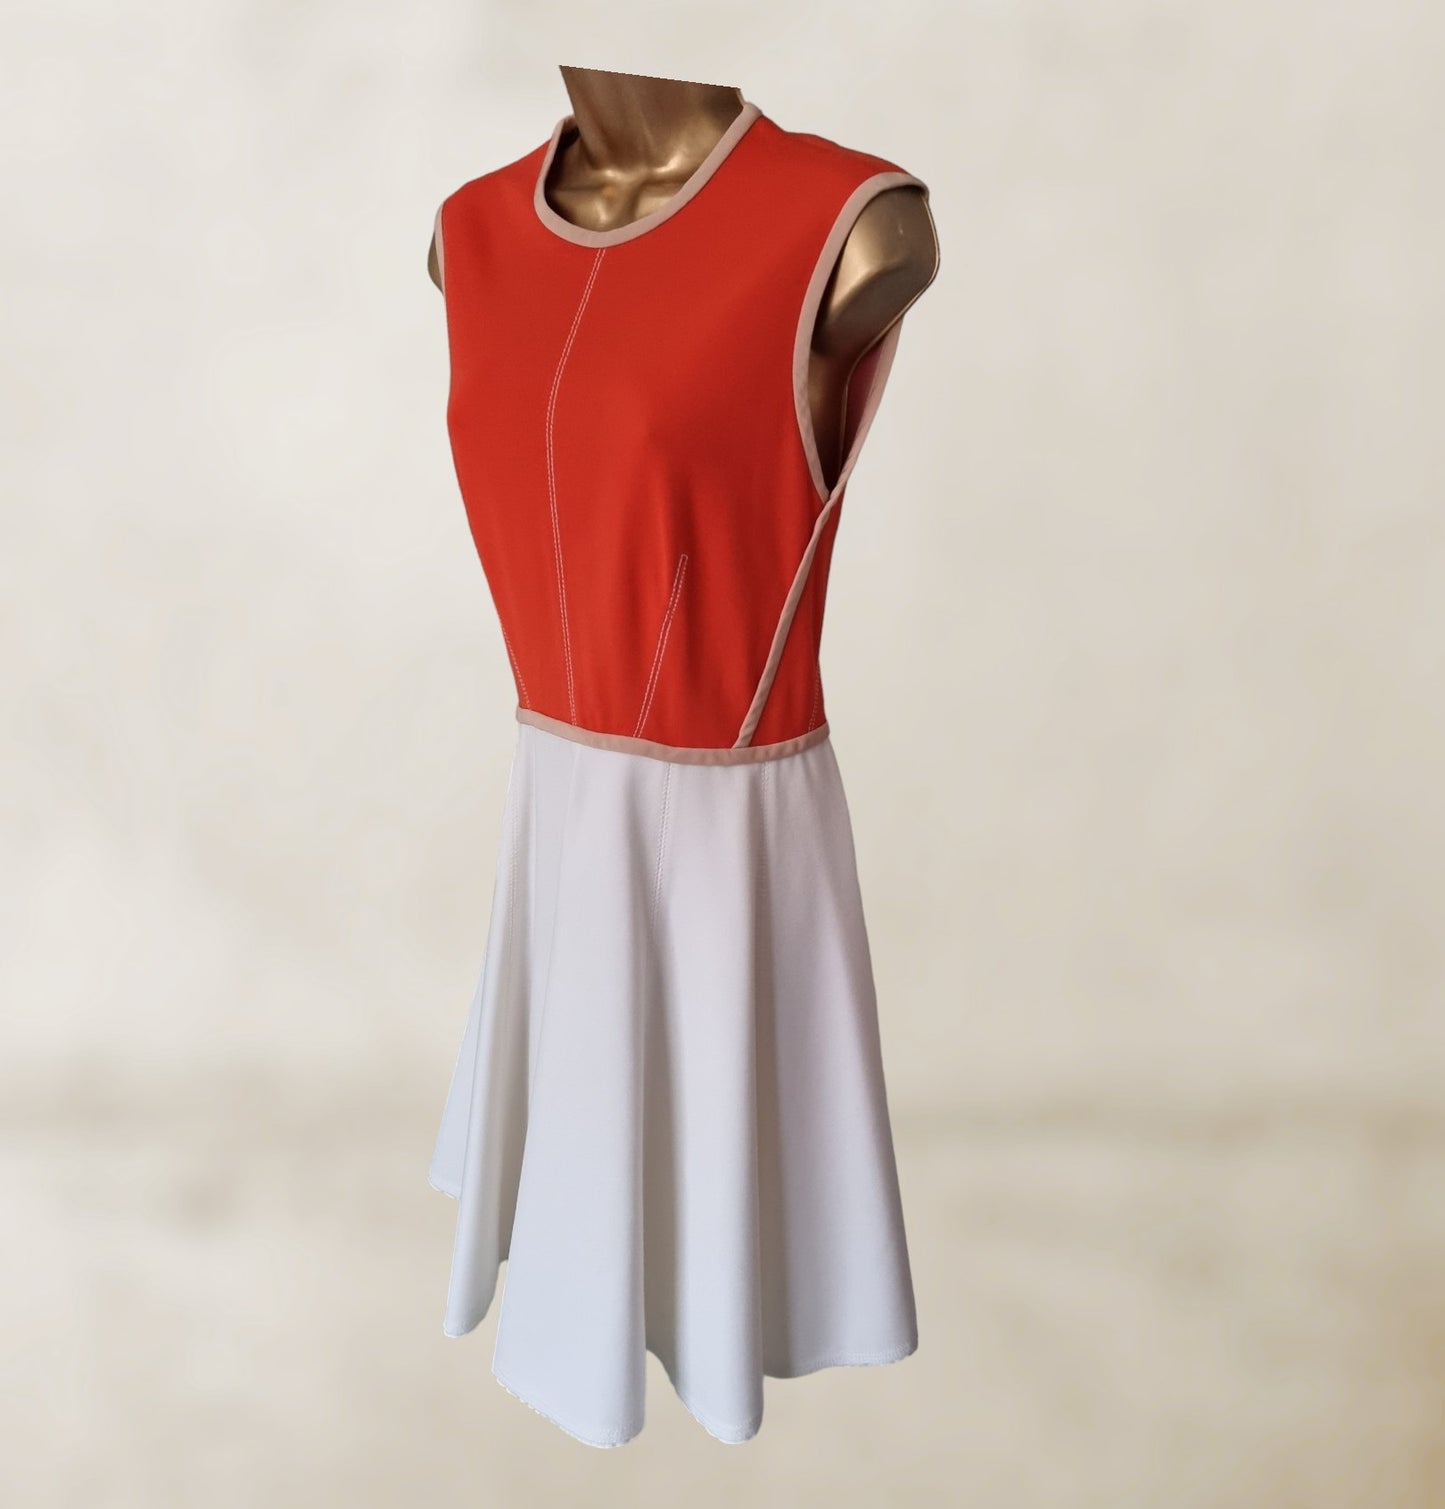 Aquilano Rimondi Womens Orange and White Fit and Flare Dress UK 8 US 4 EU 36 IT 40 Timeless Fashions